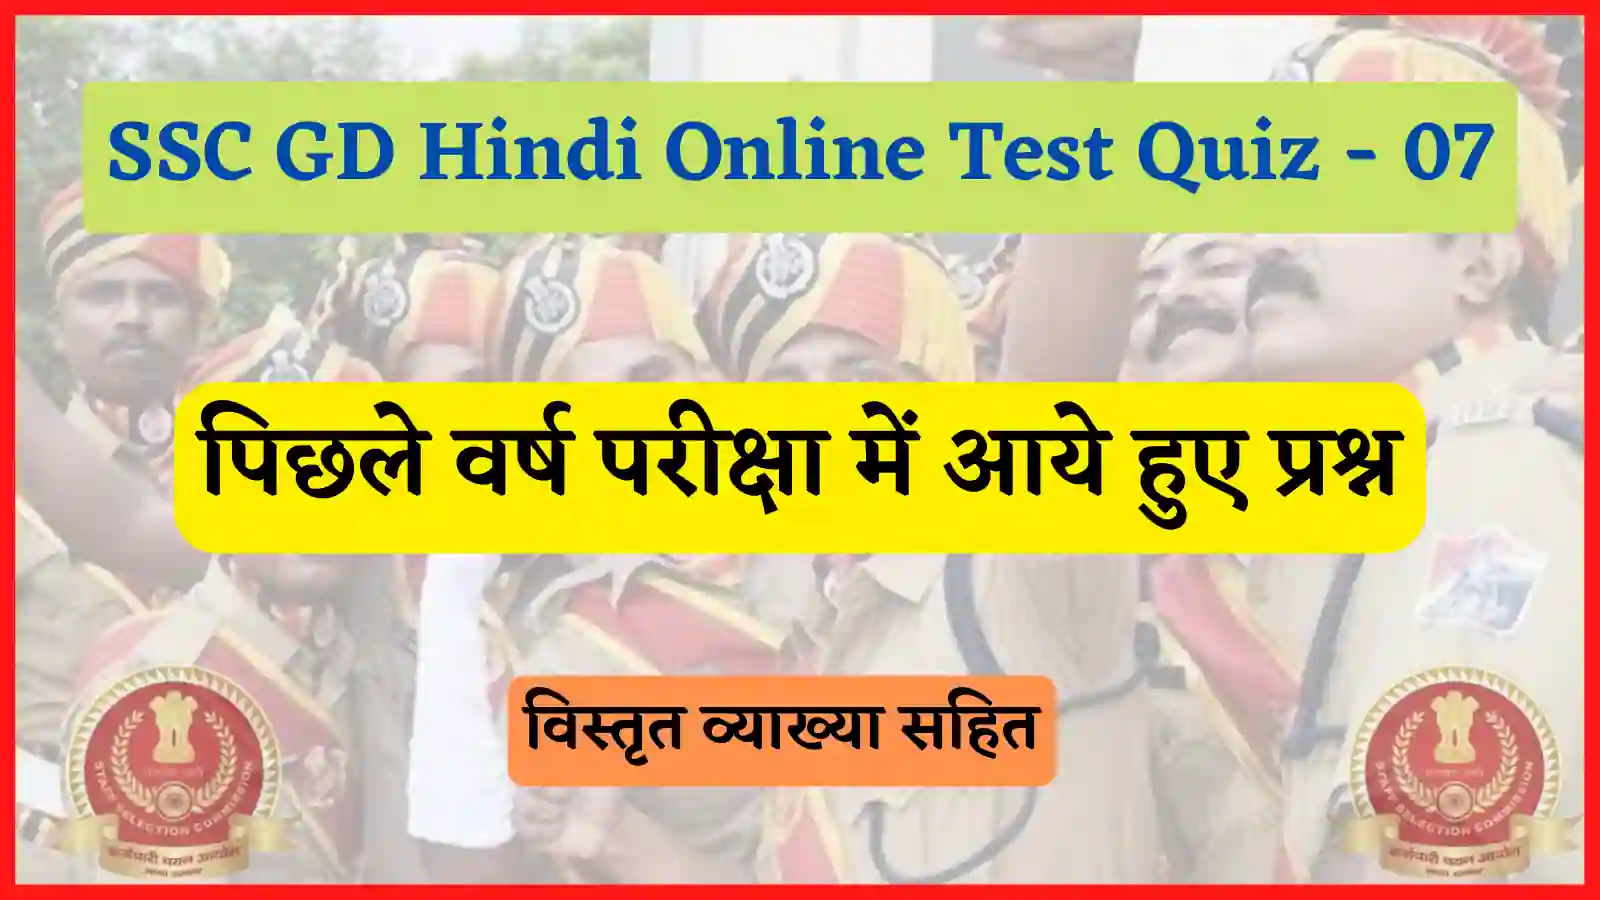  SSC GD Hindi Online Test Quiz - 07 